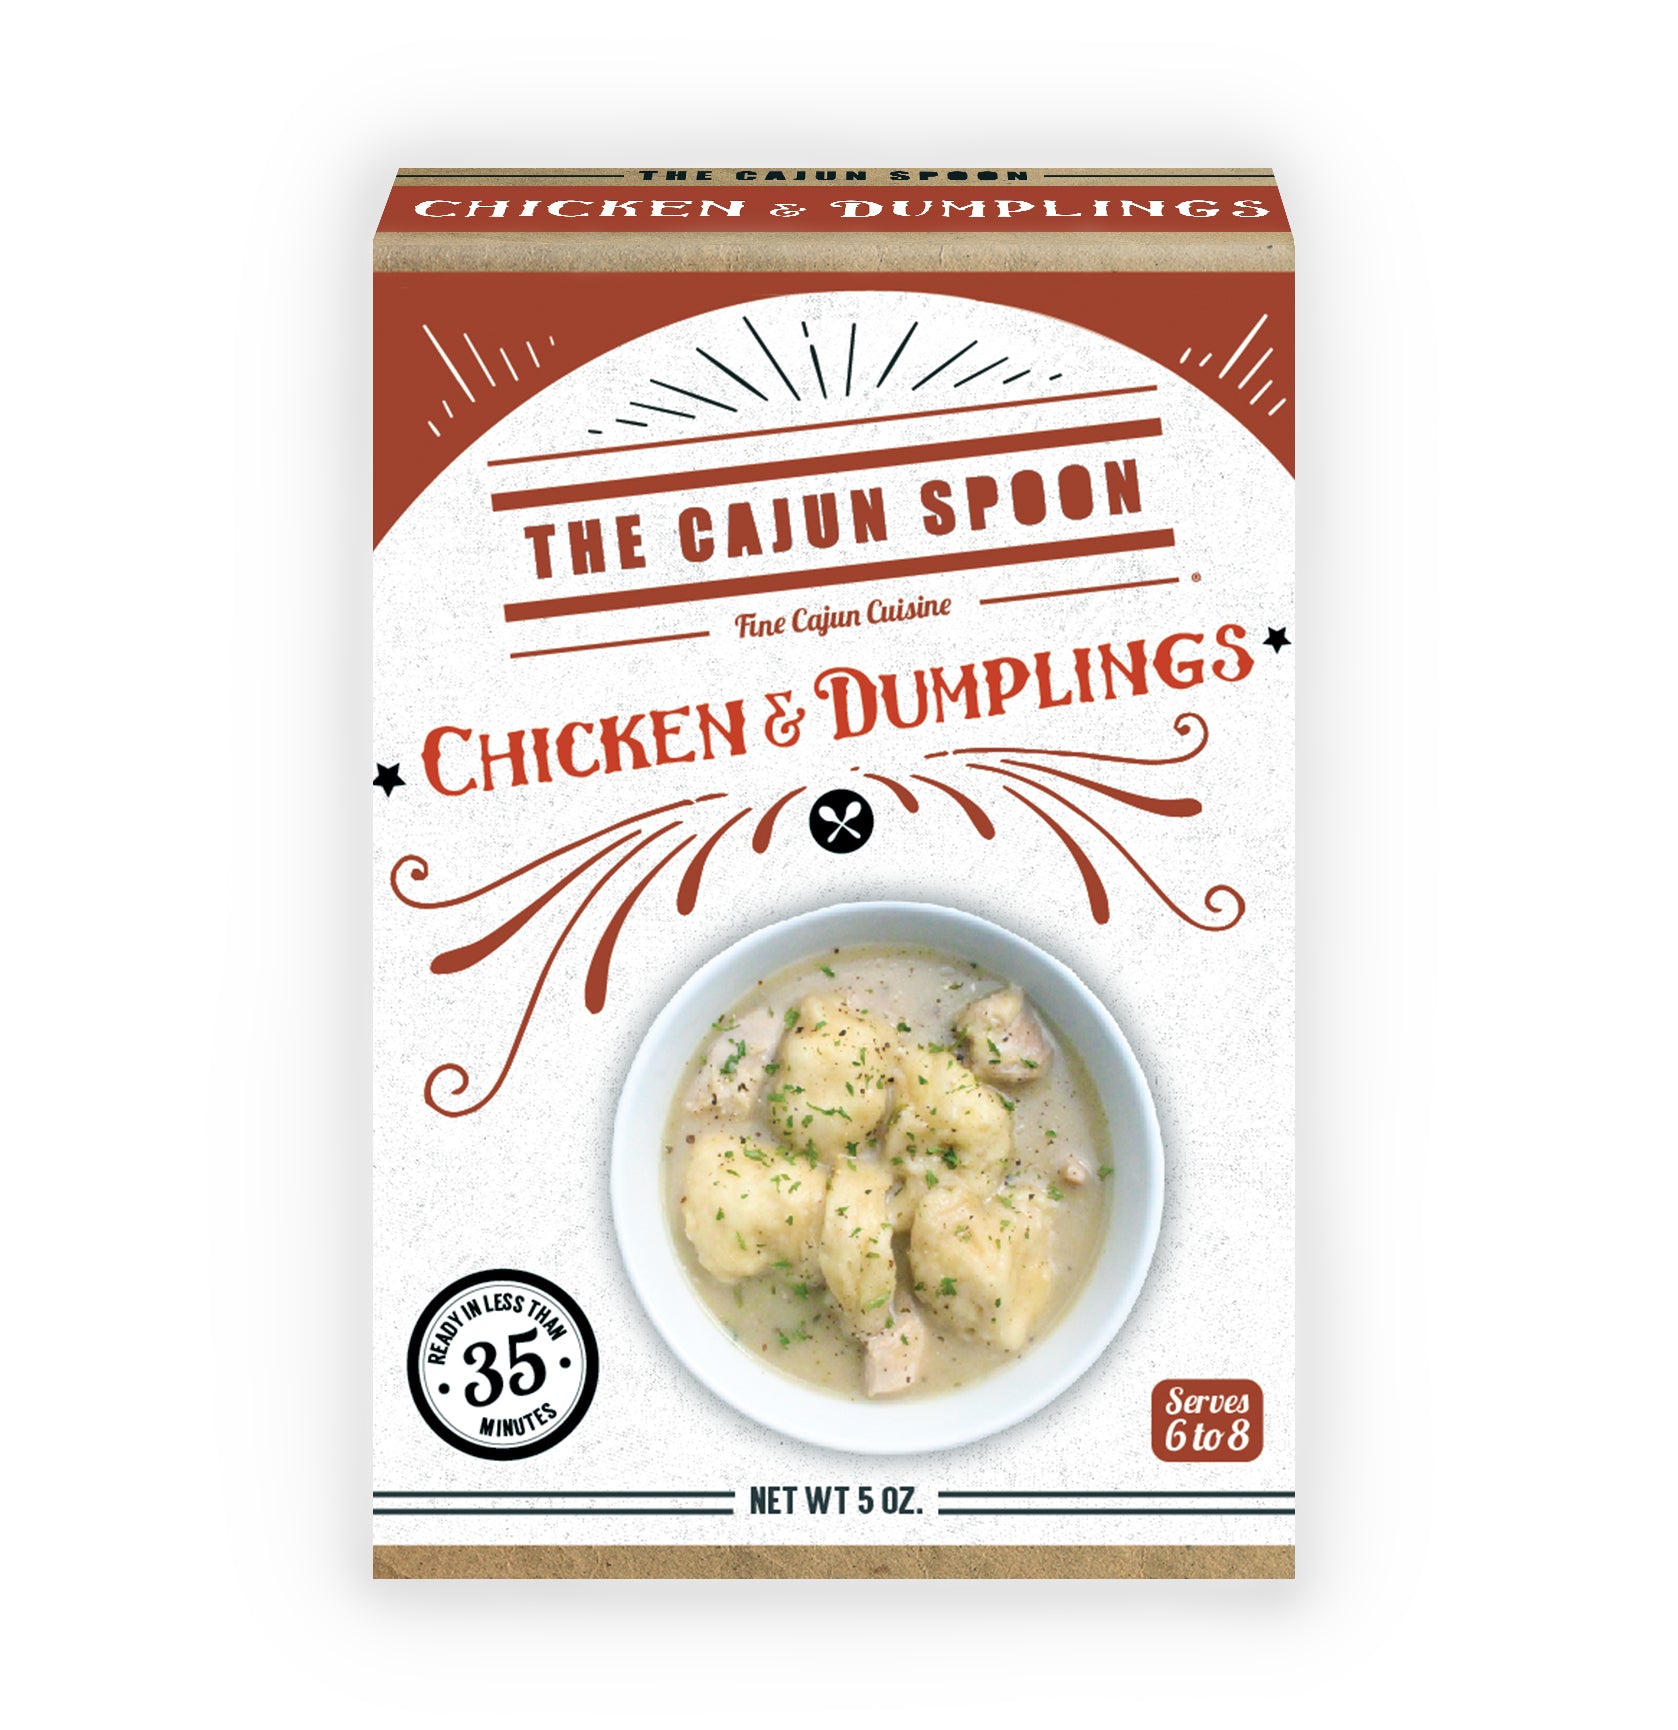 Chicken & Dumplings - The Cajun Spoon